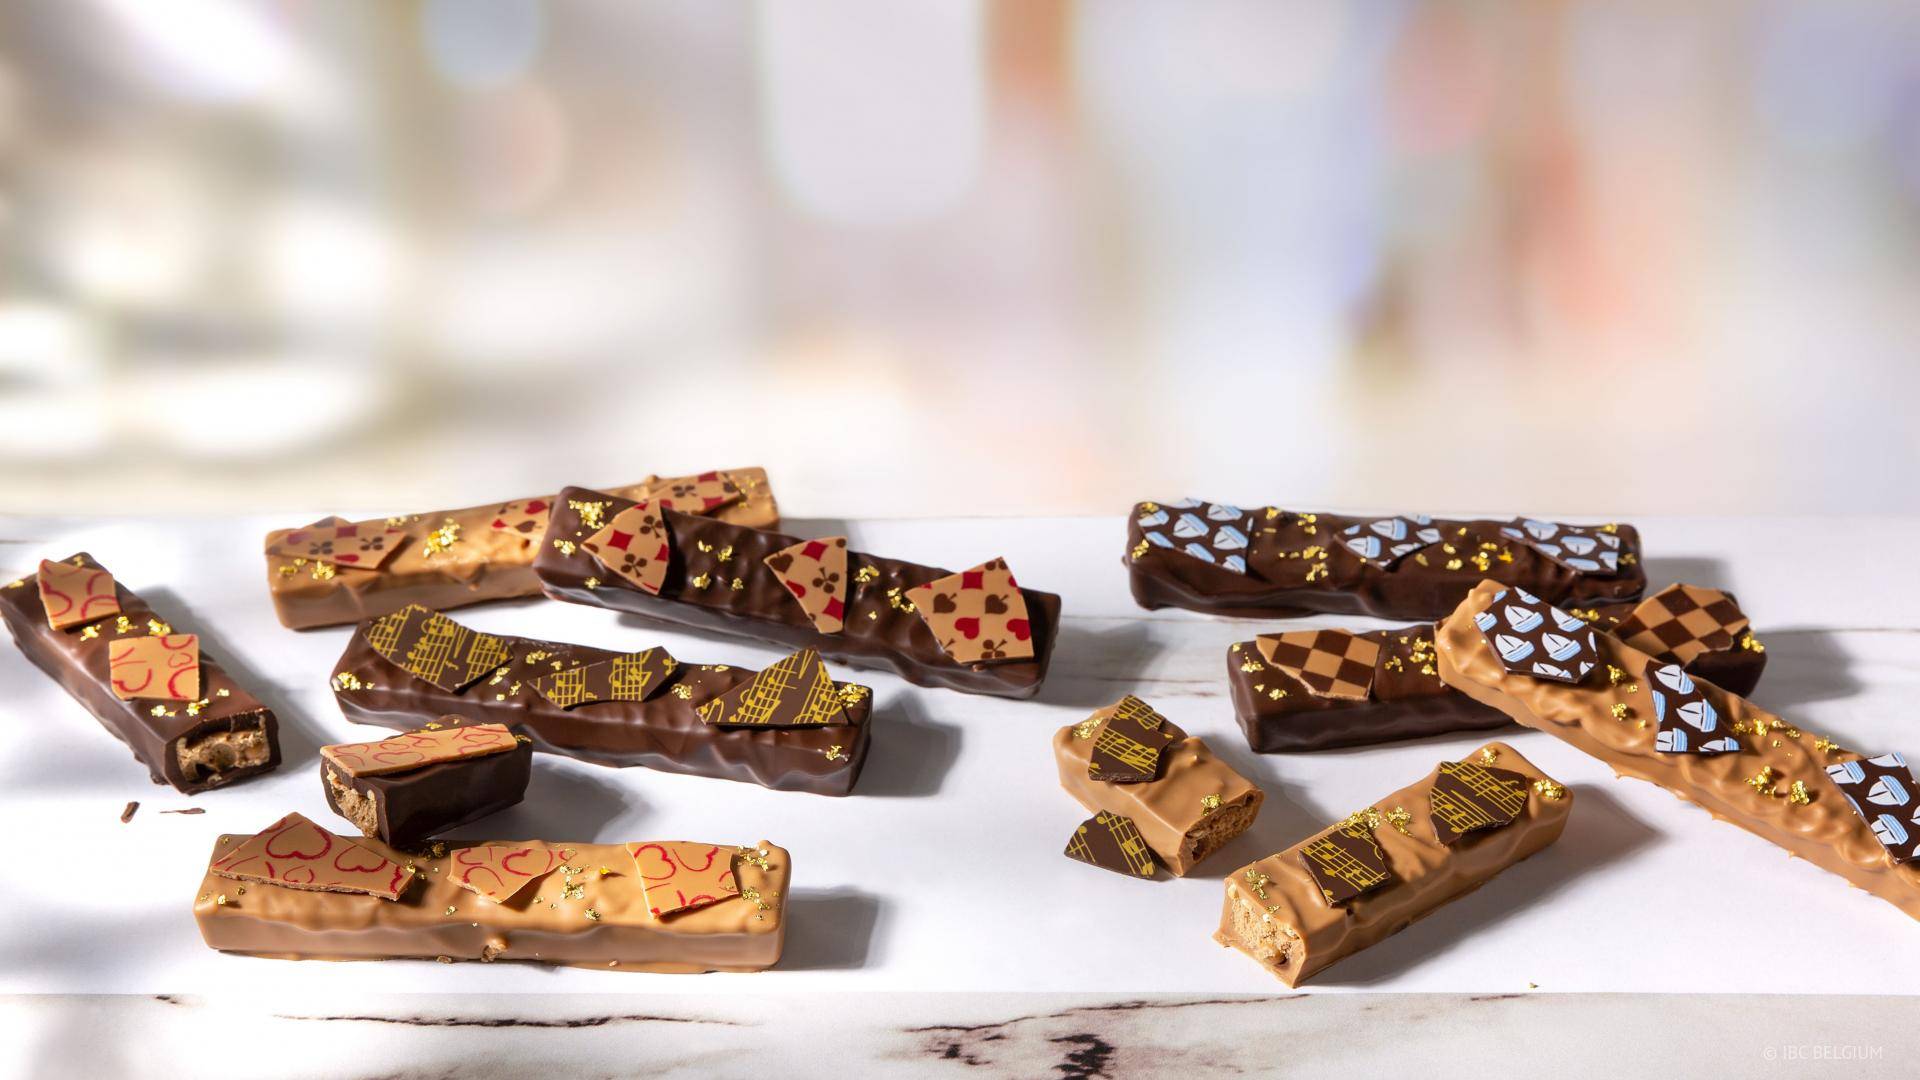 Chocolate bars with printed chocolate shards